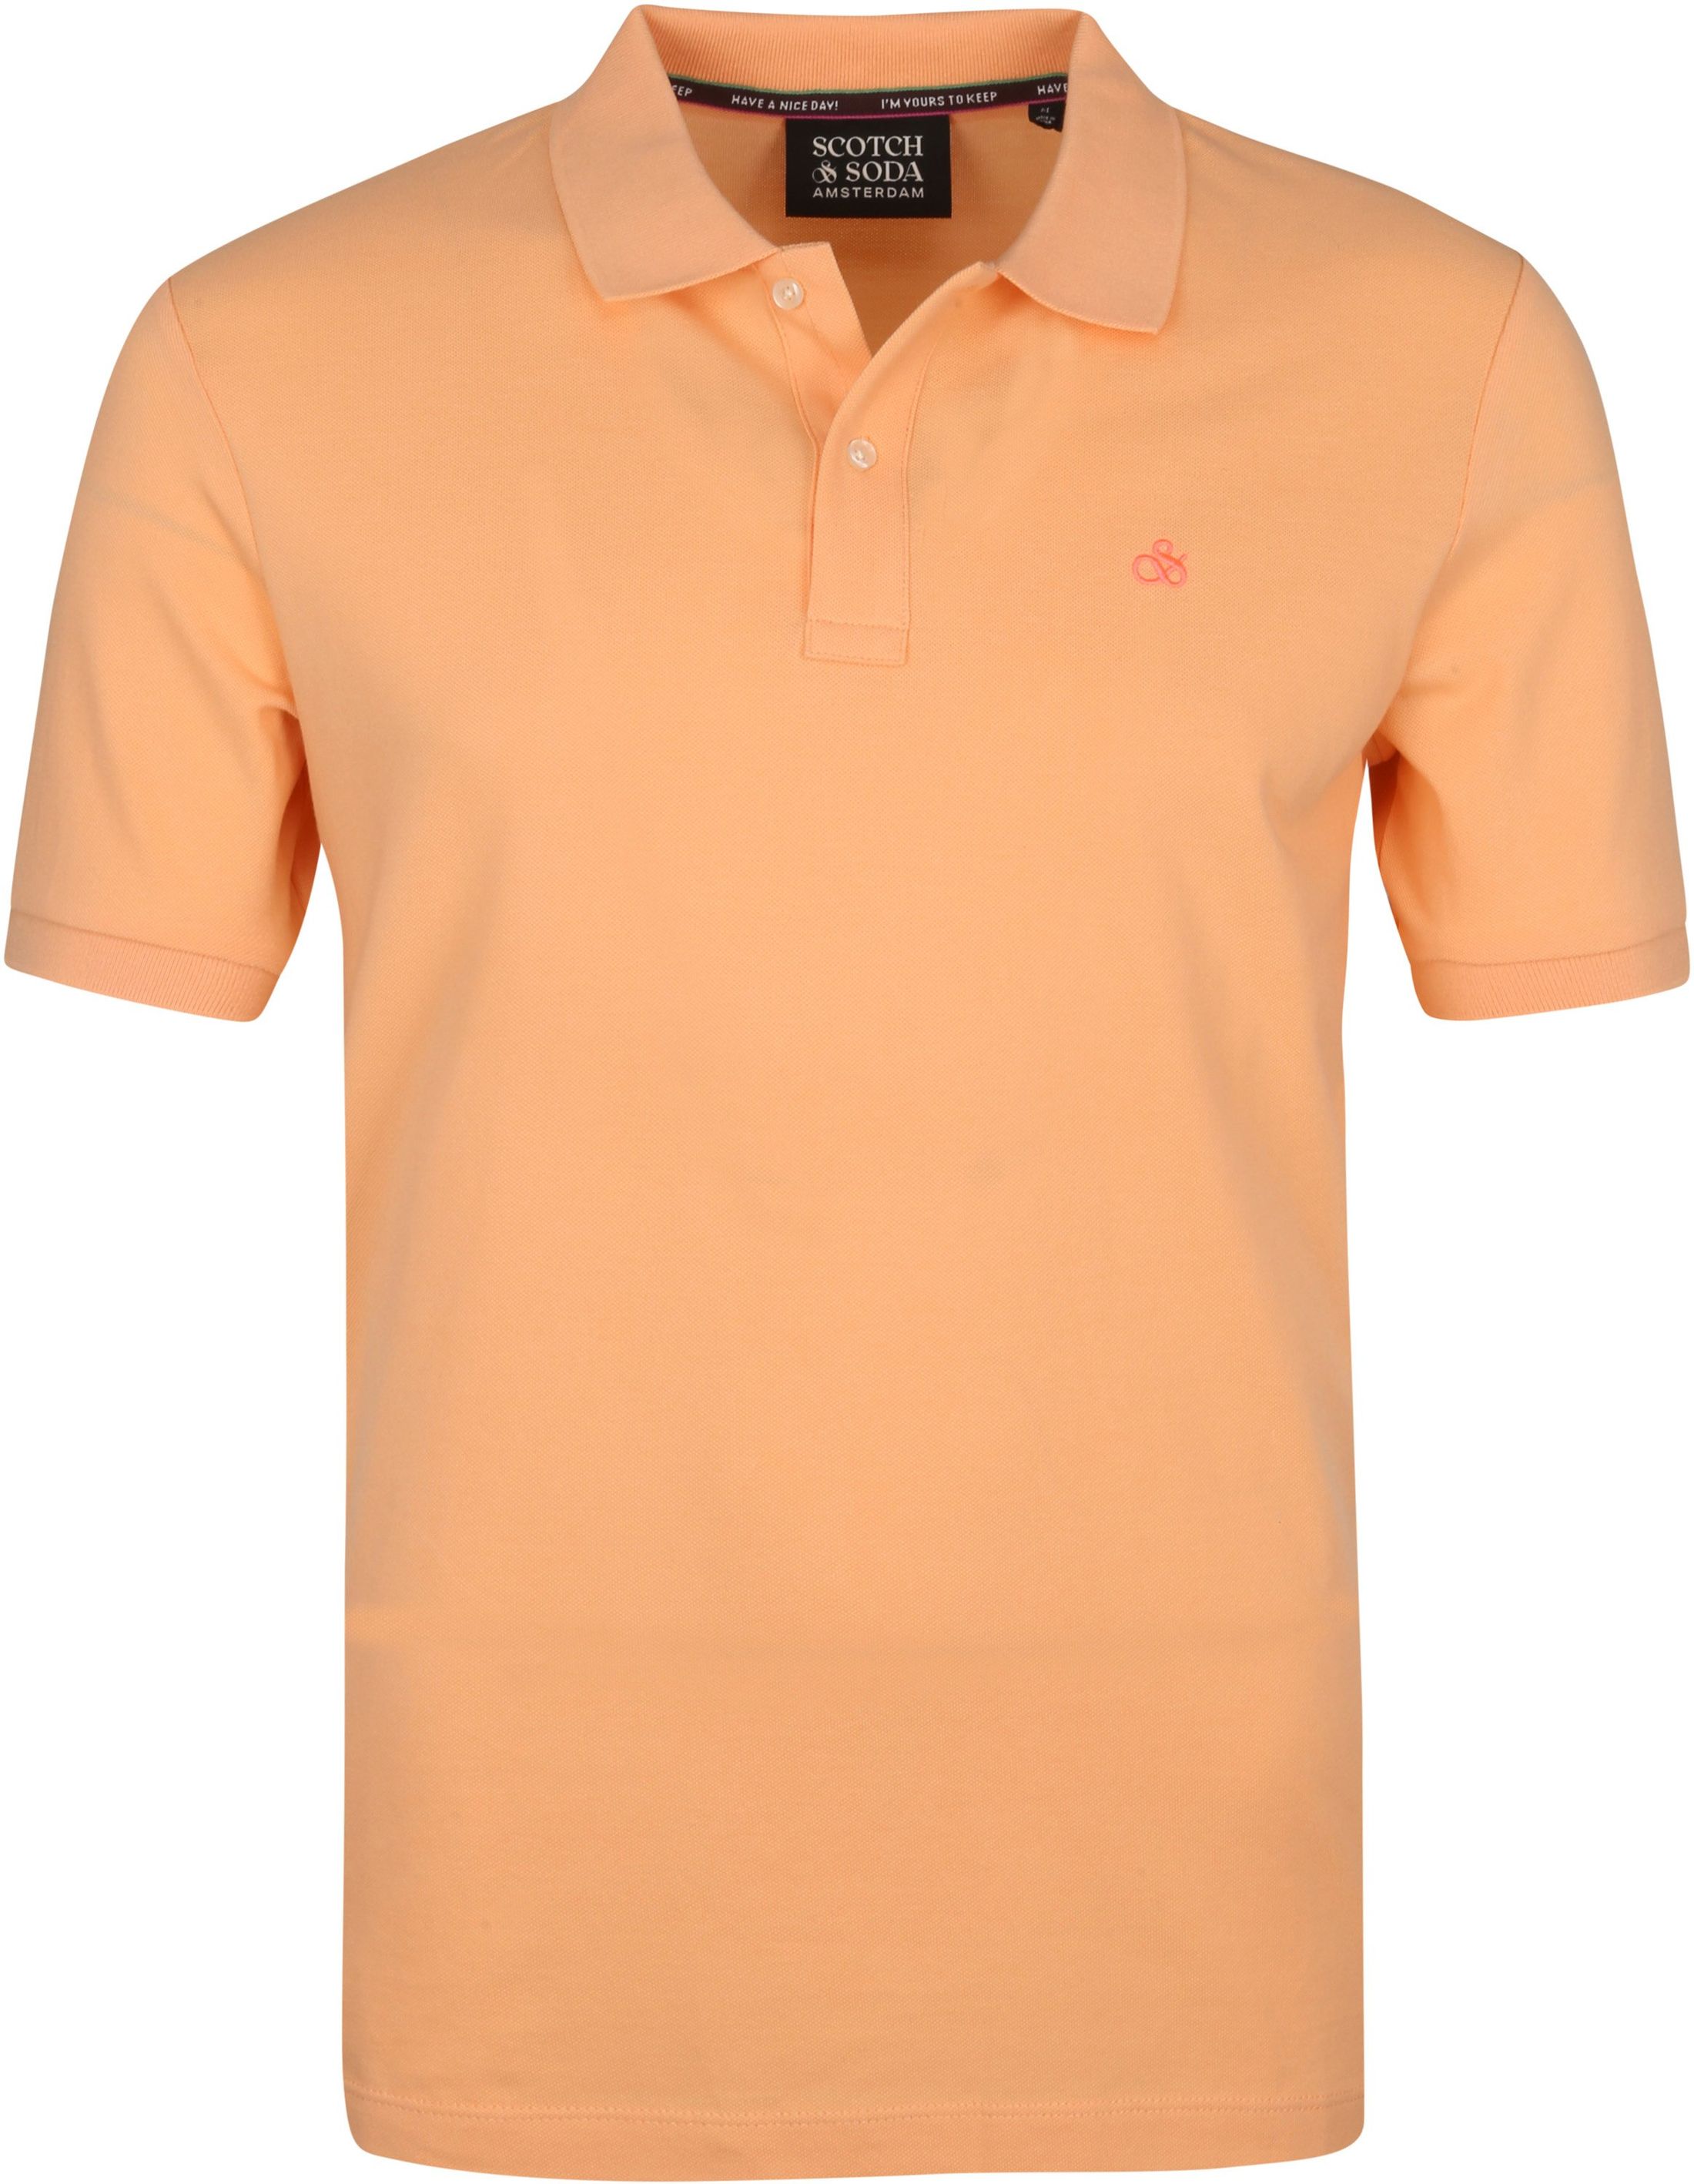 Scotch and Soda Pique Polo Shirt Orange size L